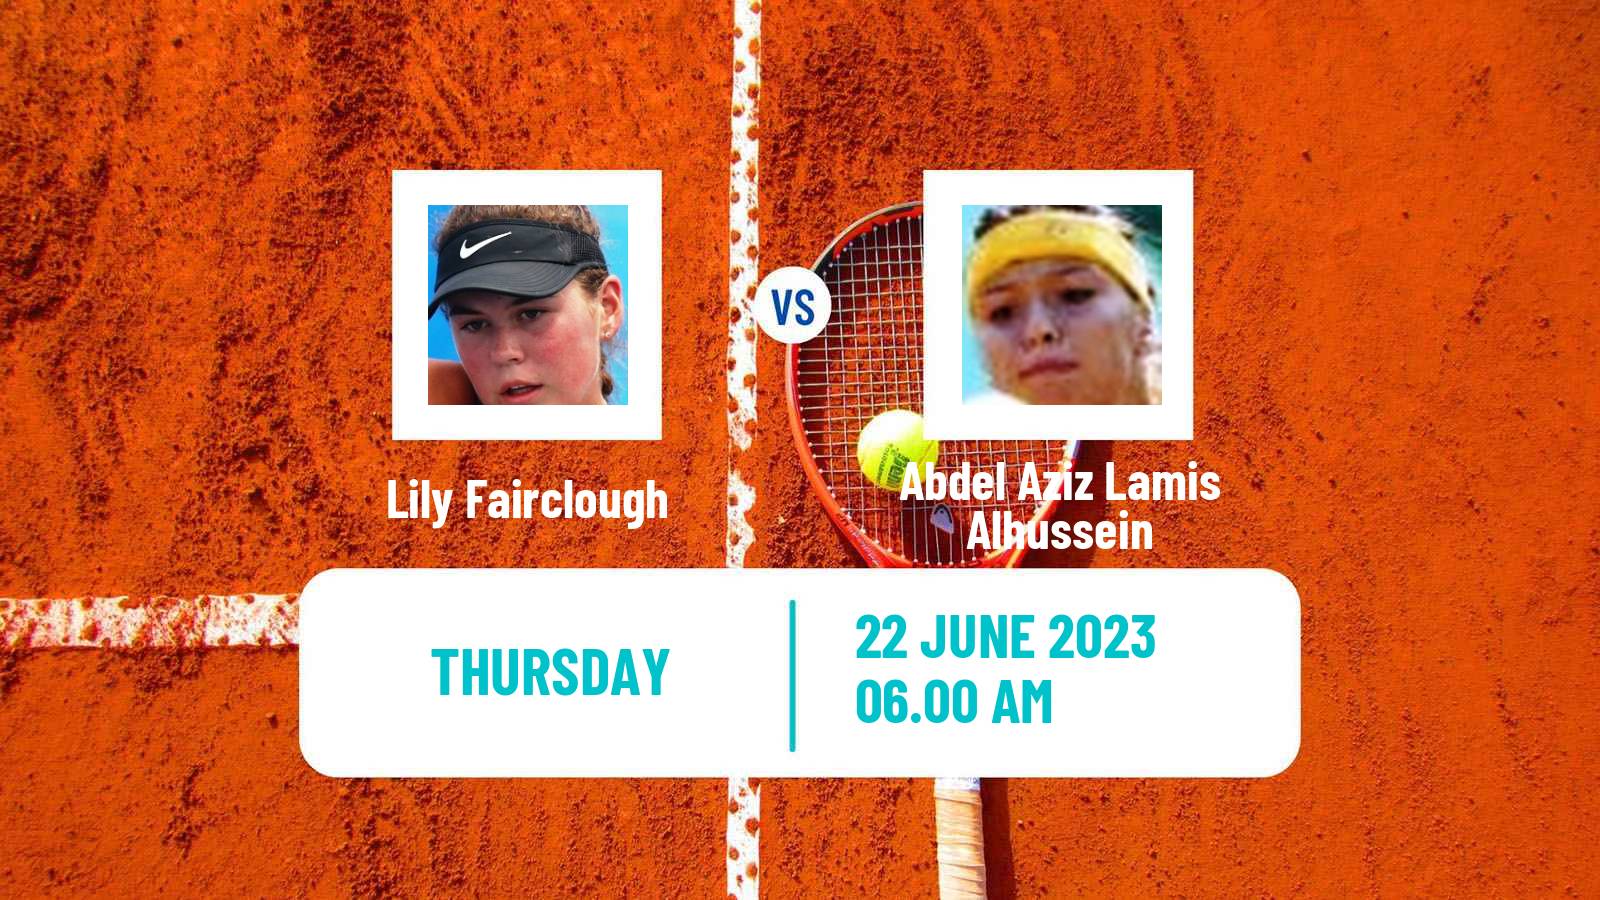 Tennis ITF W15 Monastir 20 Women Lily Fairclough - Abdel Aziz Lamis Alhussein